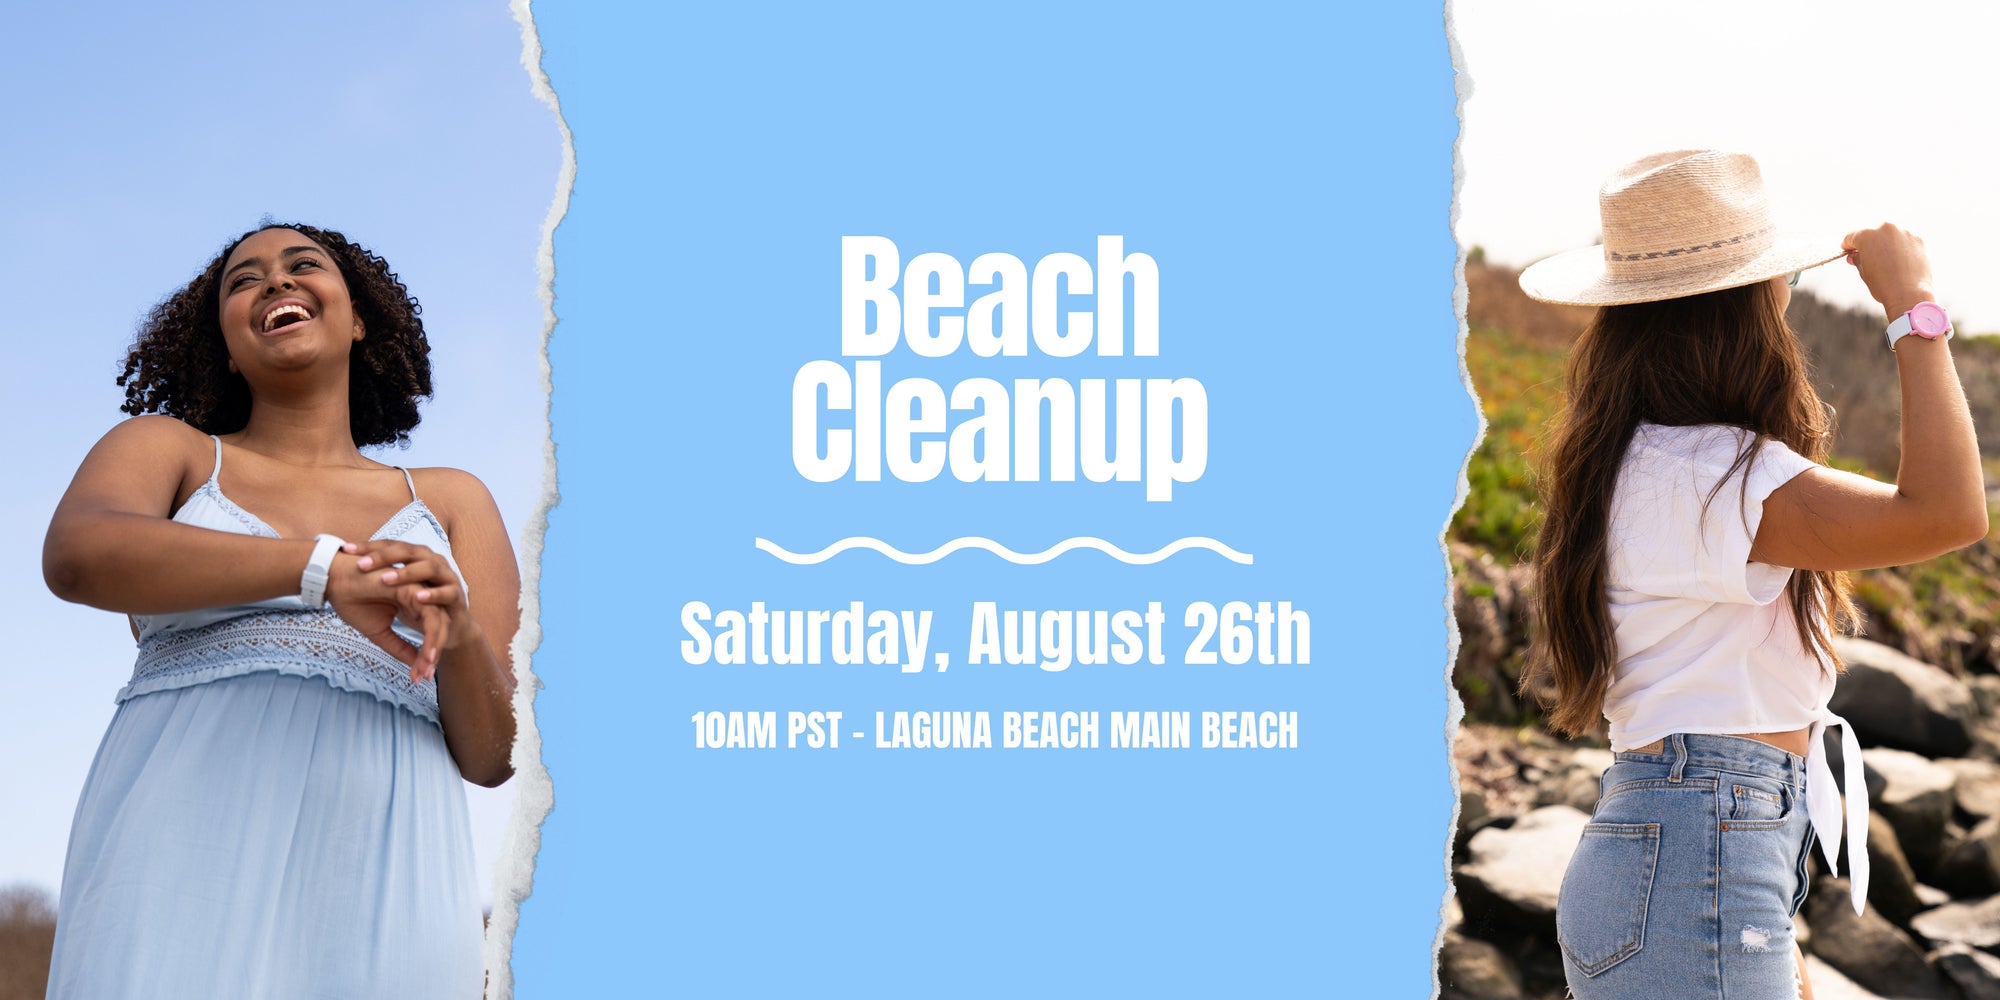 Join Us for a Coastal Clean-Up at Laguna Beach Main Beach on Saturday, August 26th